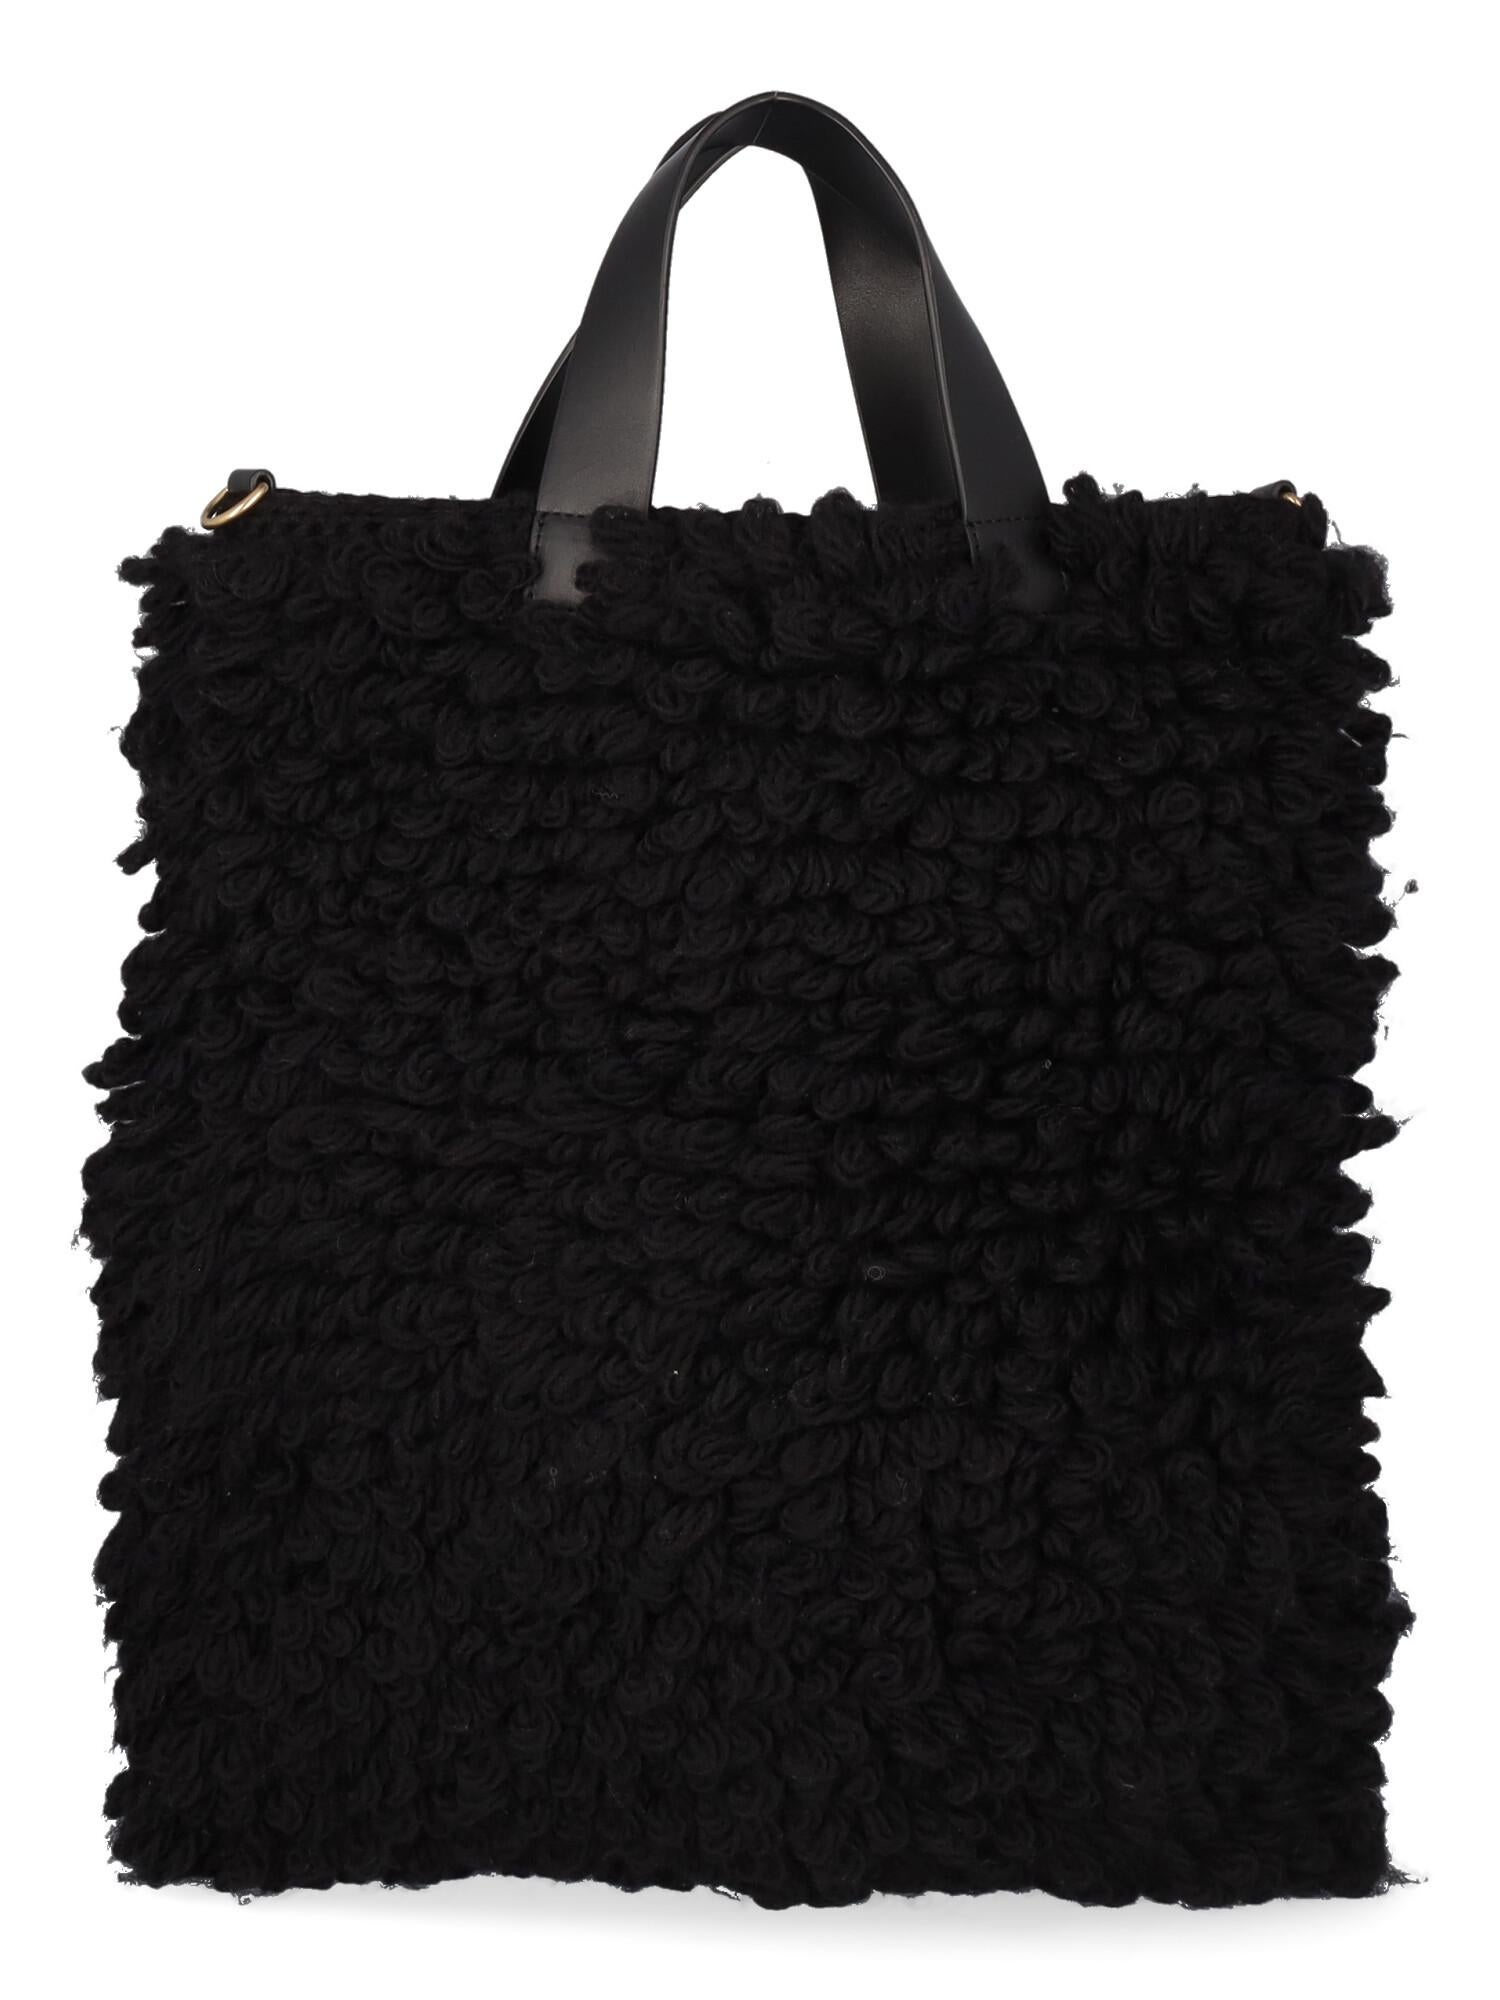 black wool handbag bag